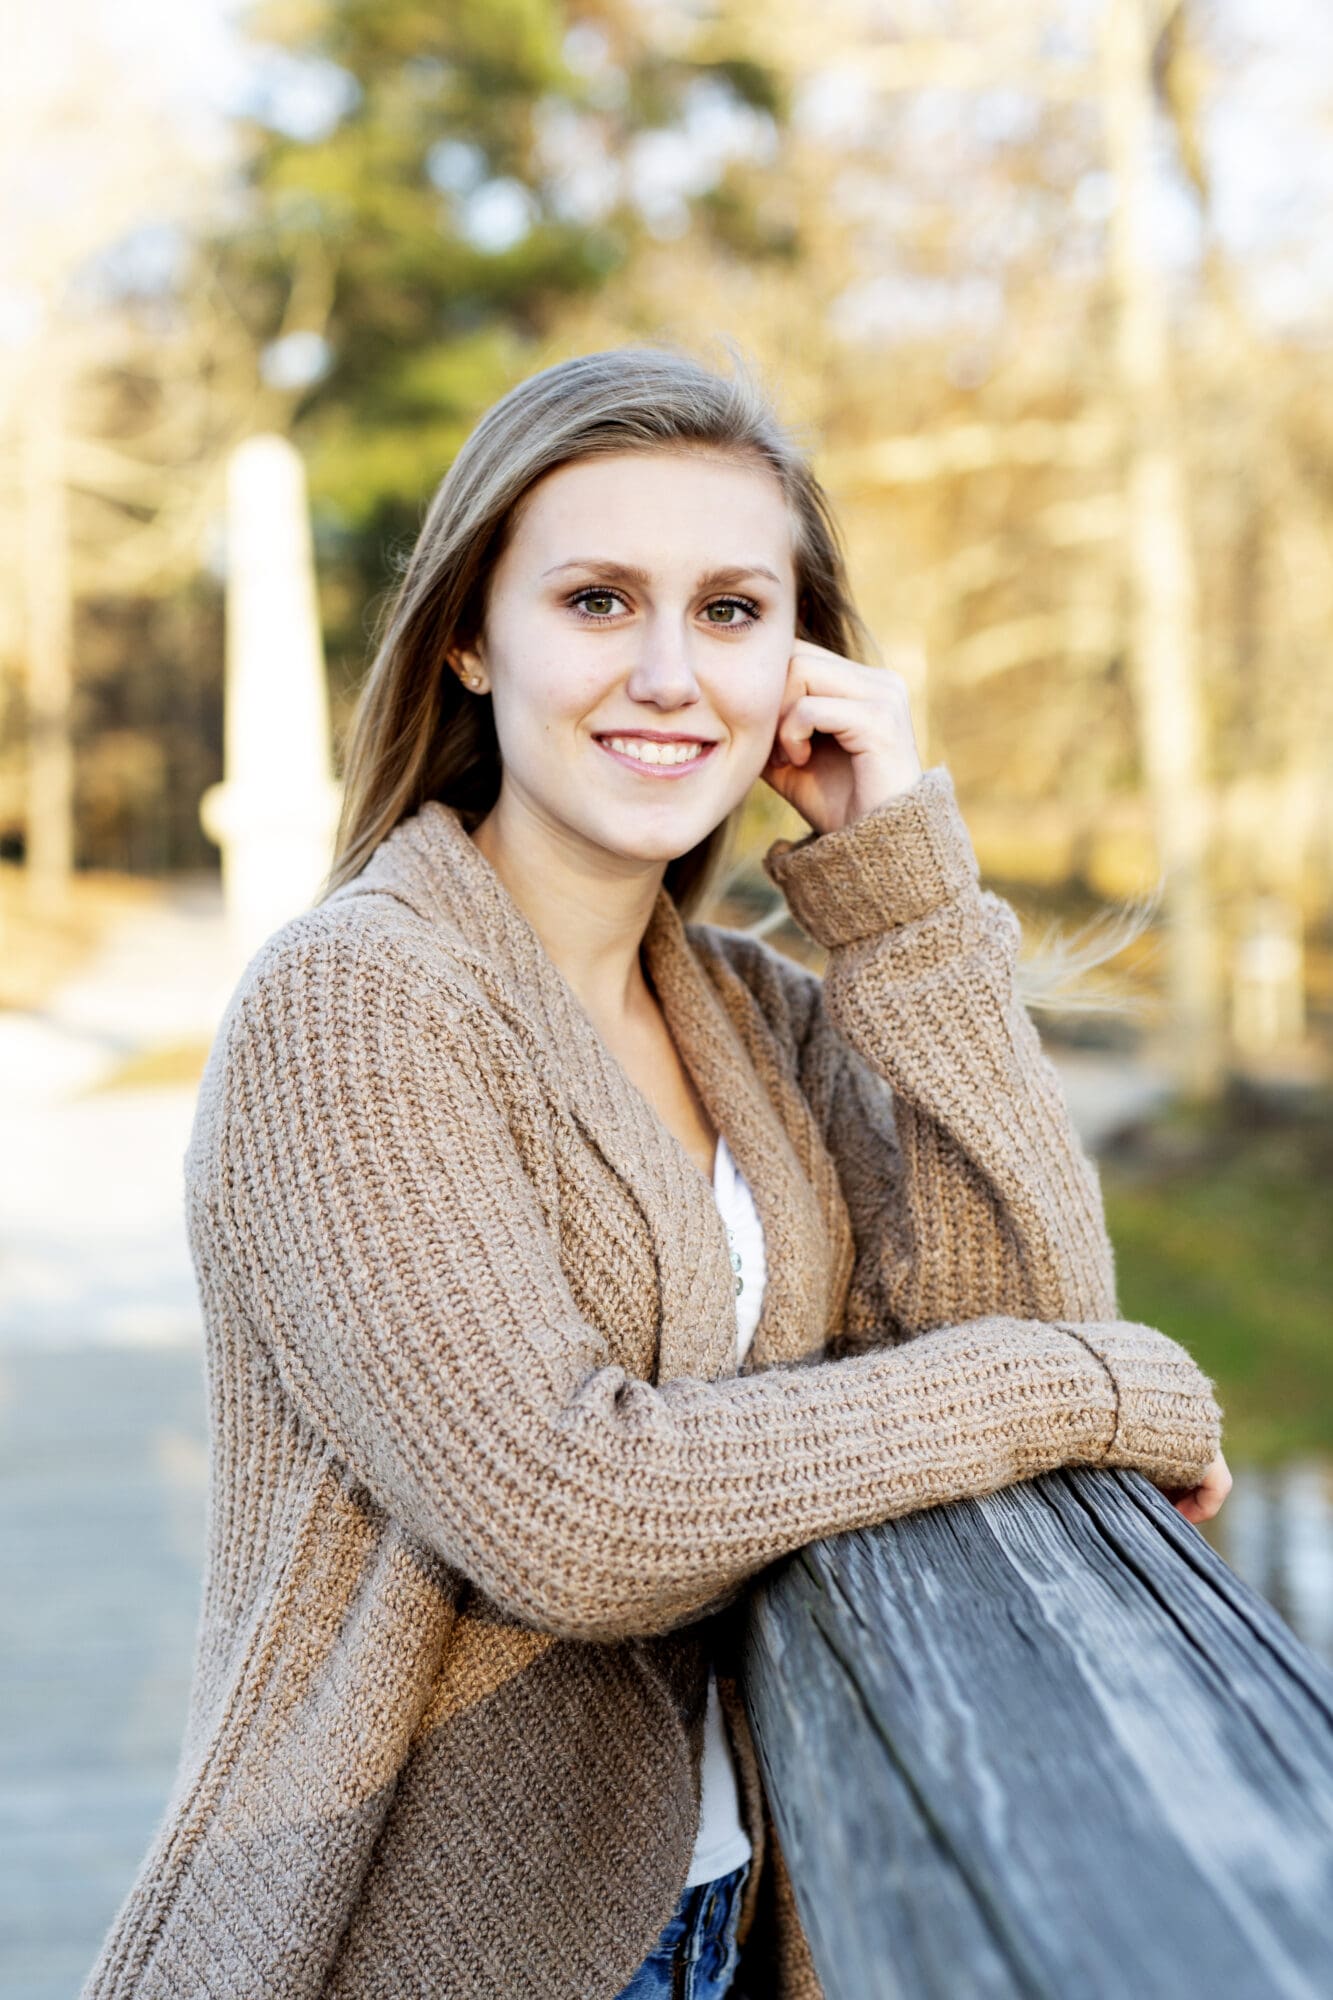 senior girl portrait leaning on elbow on wooden bridge